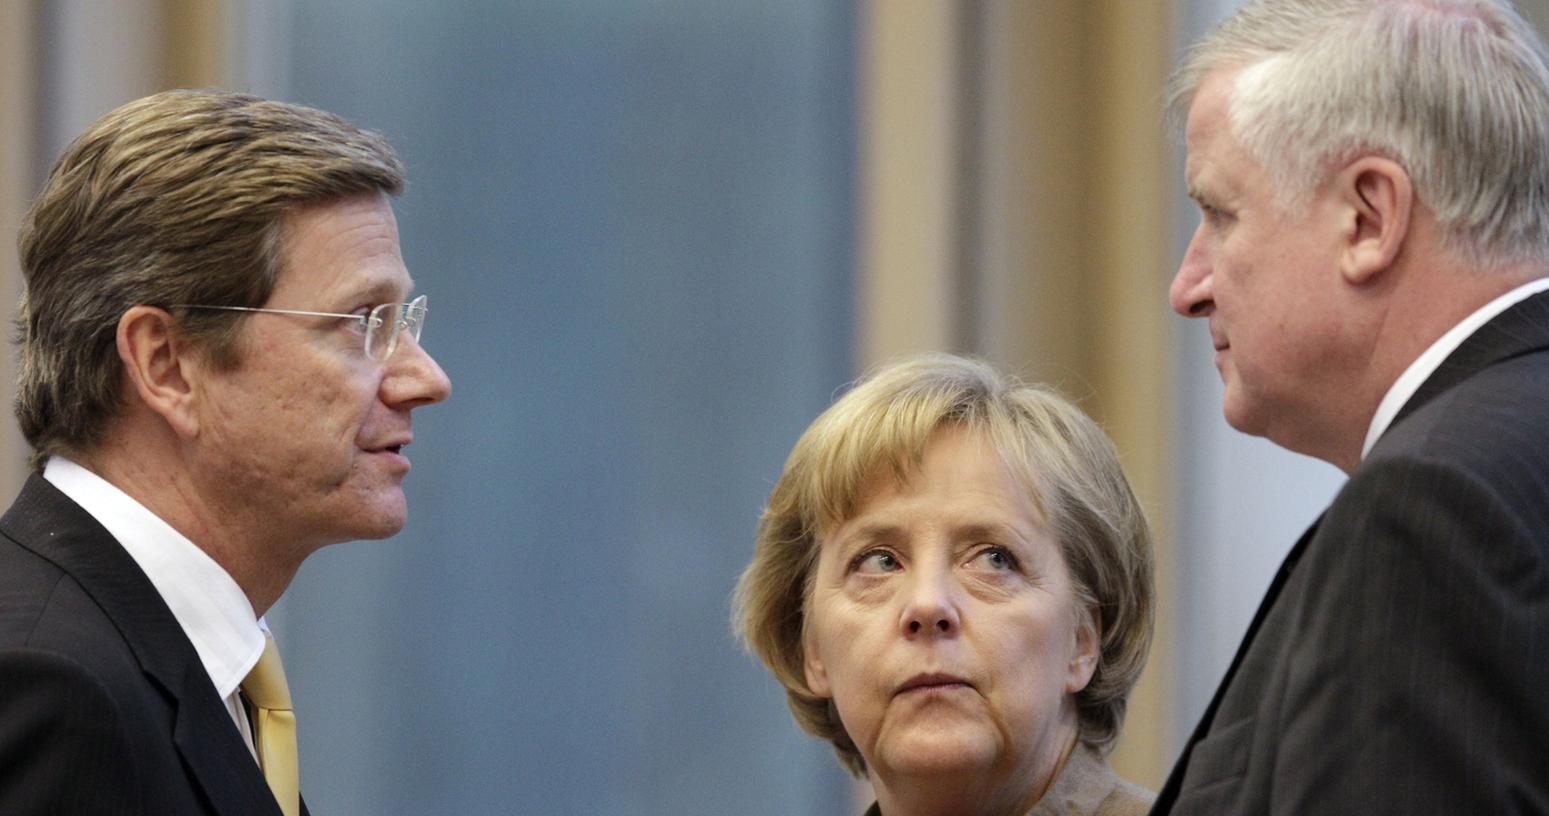 Merkel risikoscheu, Westerwelle eitel, Seehofer unberechenbar